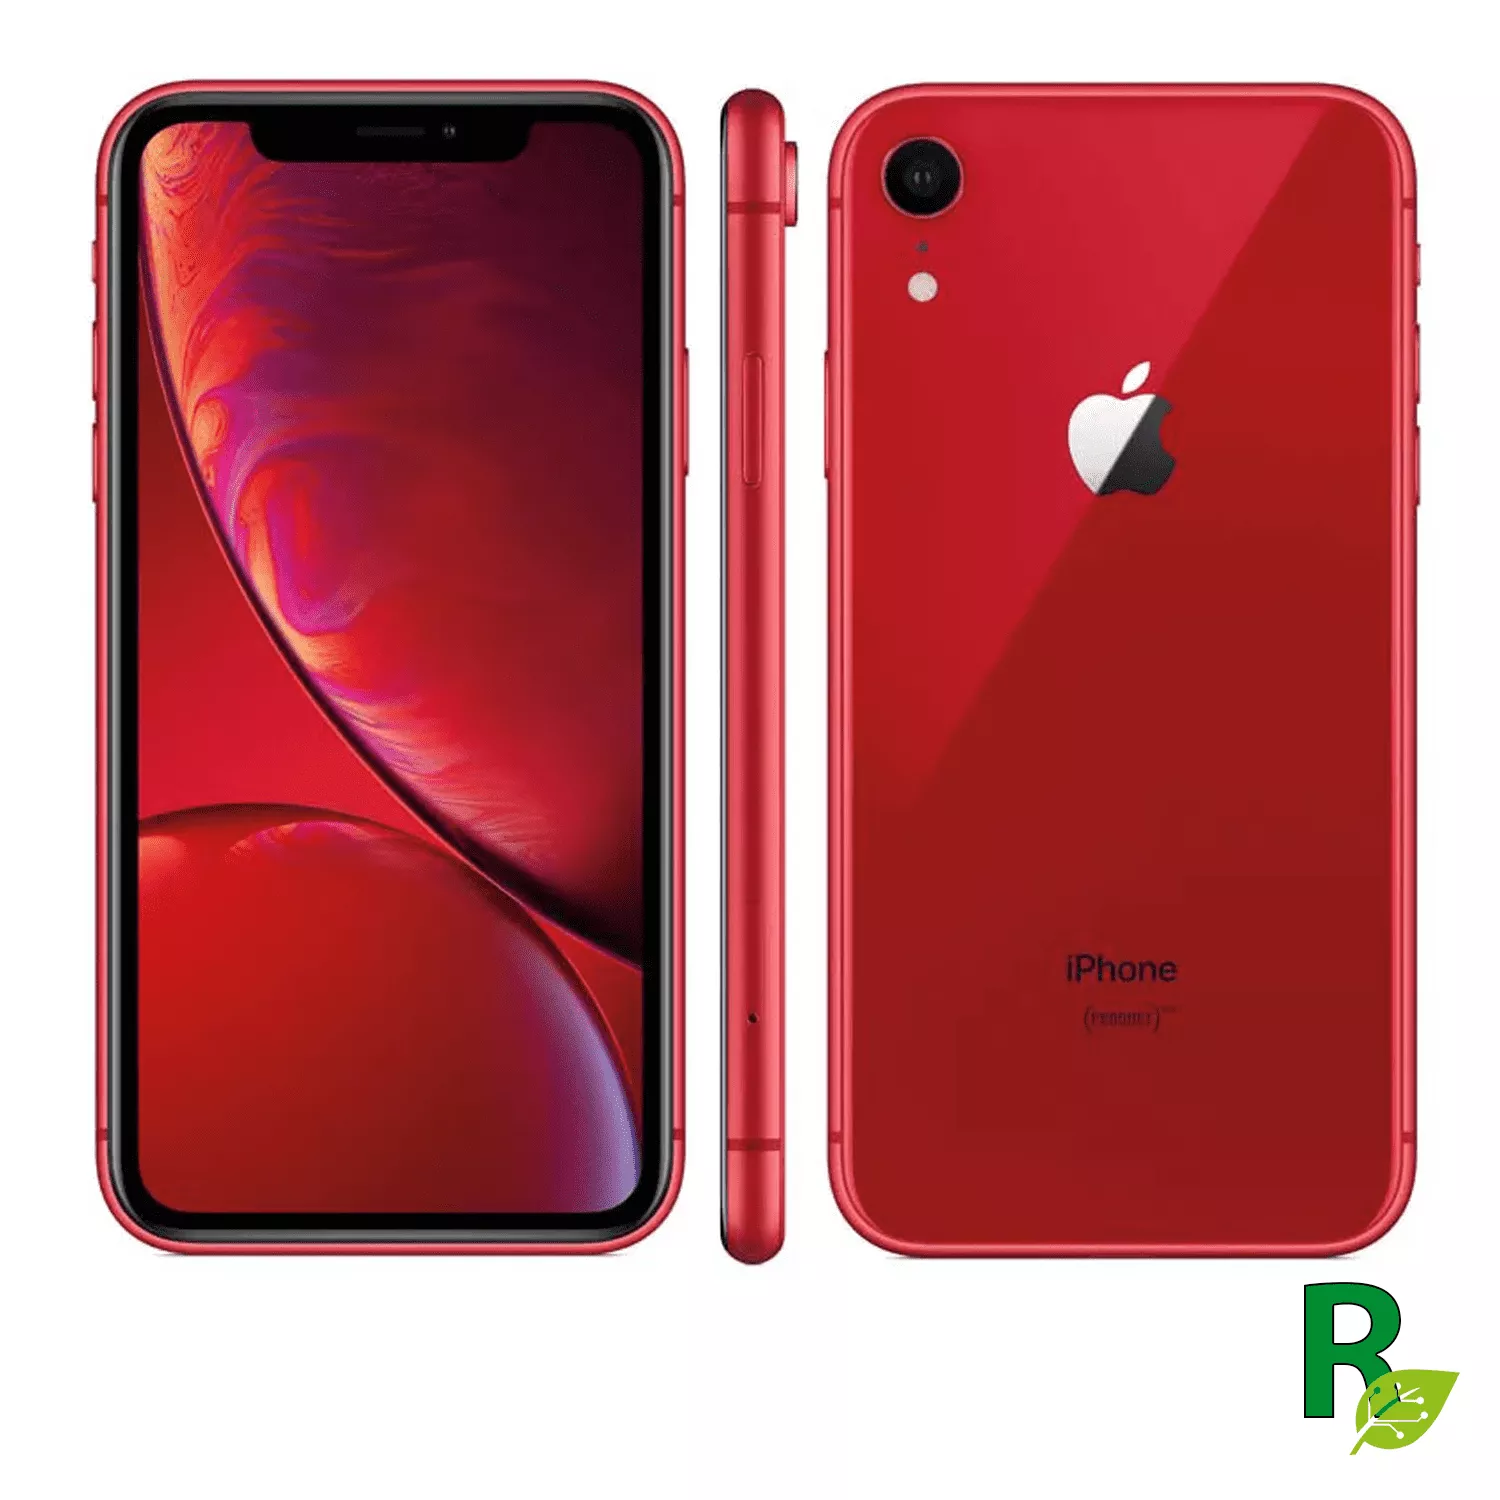 Celular seminuevo iPhone XR 64GB - Rojo - XRRED64AB - Cat. AB  XR64IPH5